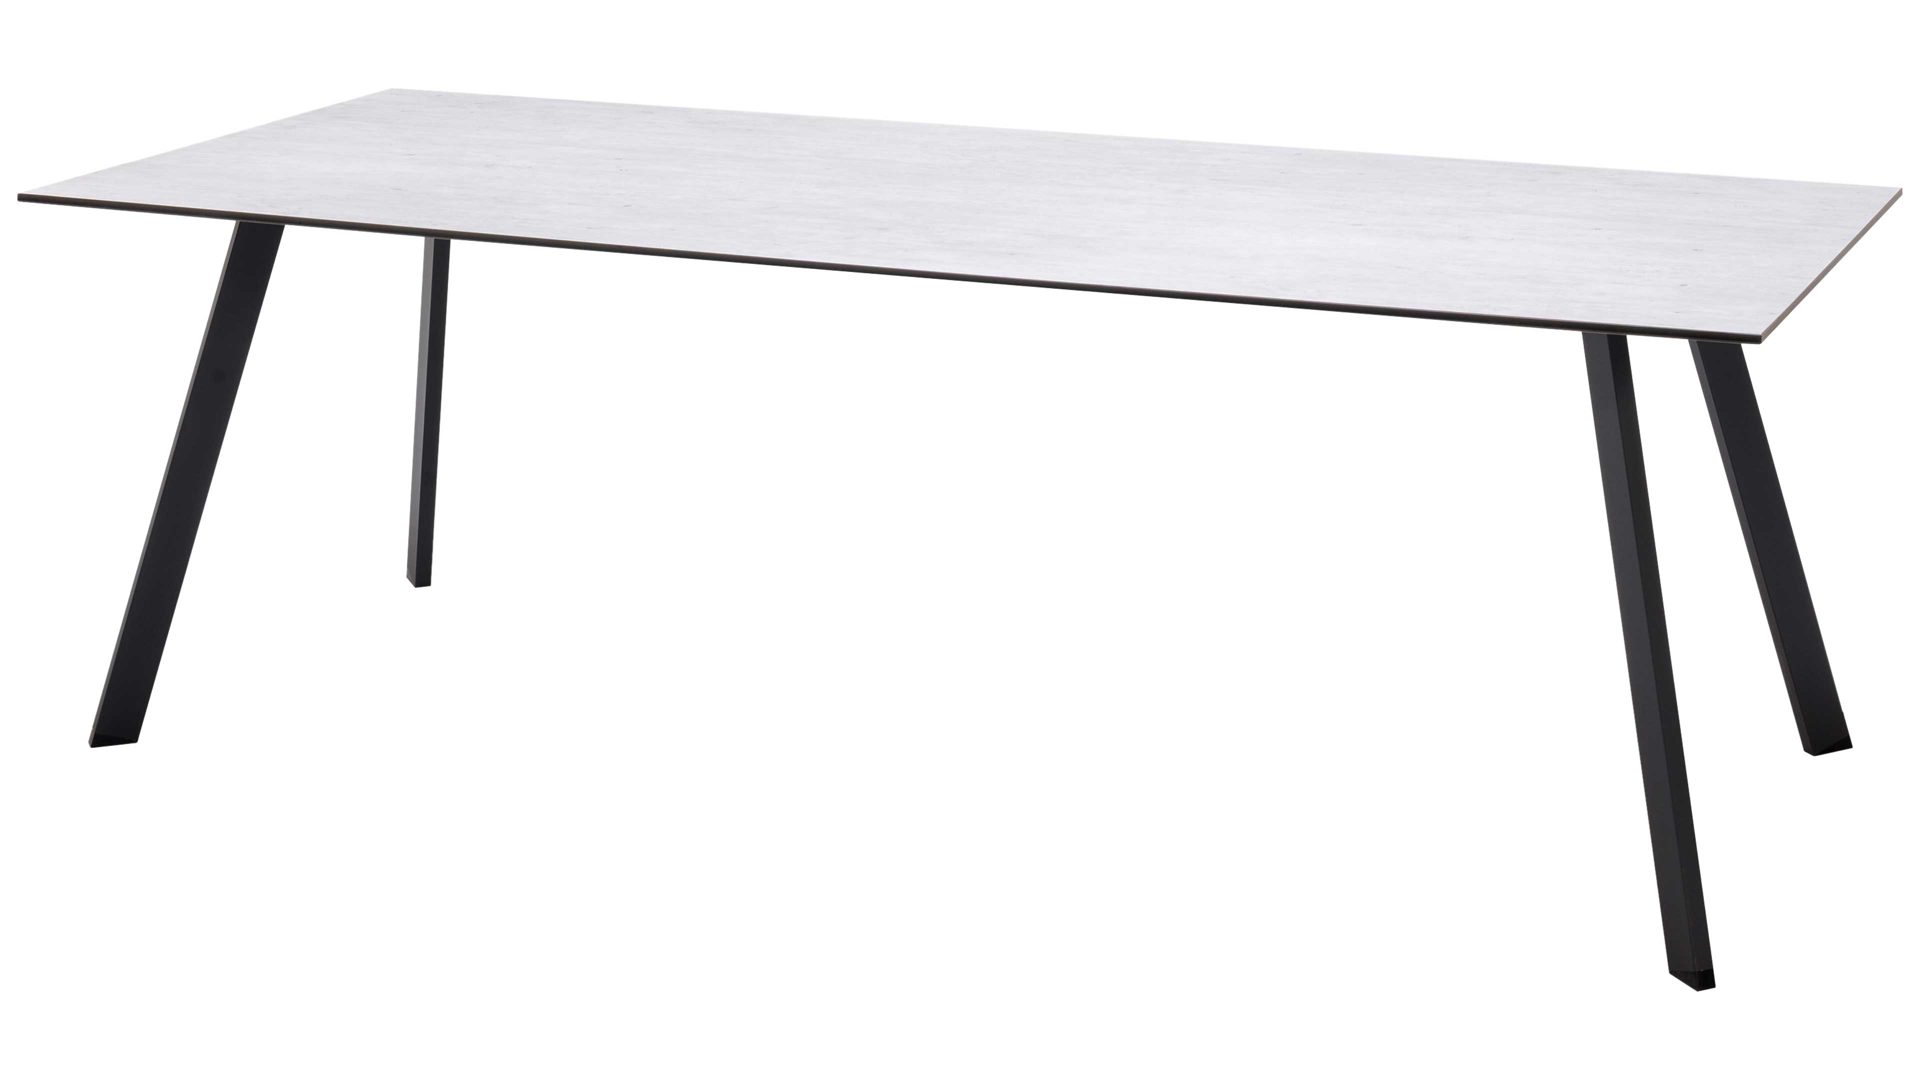 Gartentisch Scancom aus Holz in Grau LifestyleGarden® Gartenmöbel Serie Opal - Esstisch betonfarbenes HPL & Aluminiumgestell - ca. 220 x 90 cm